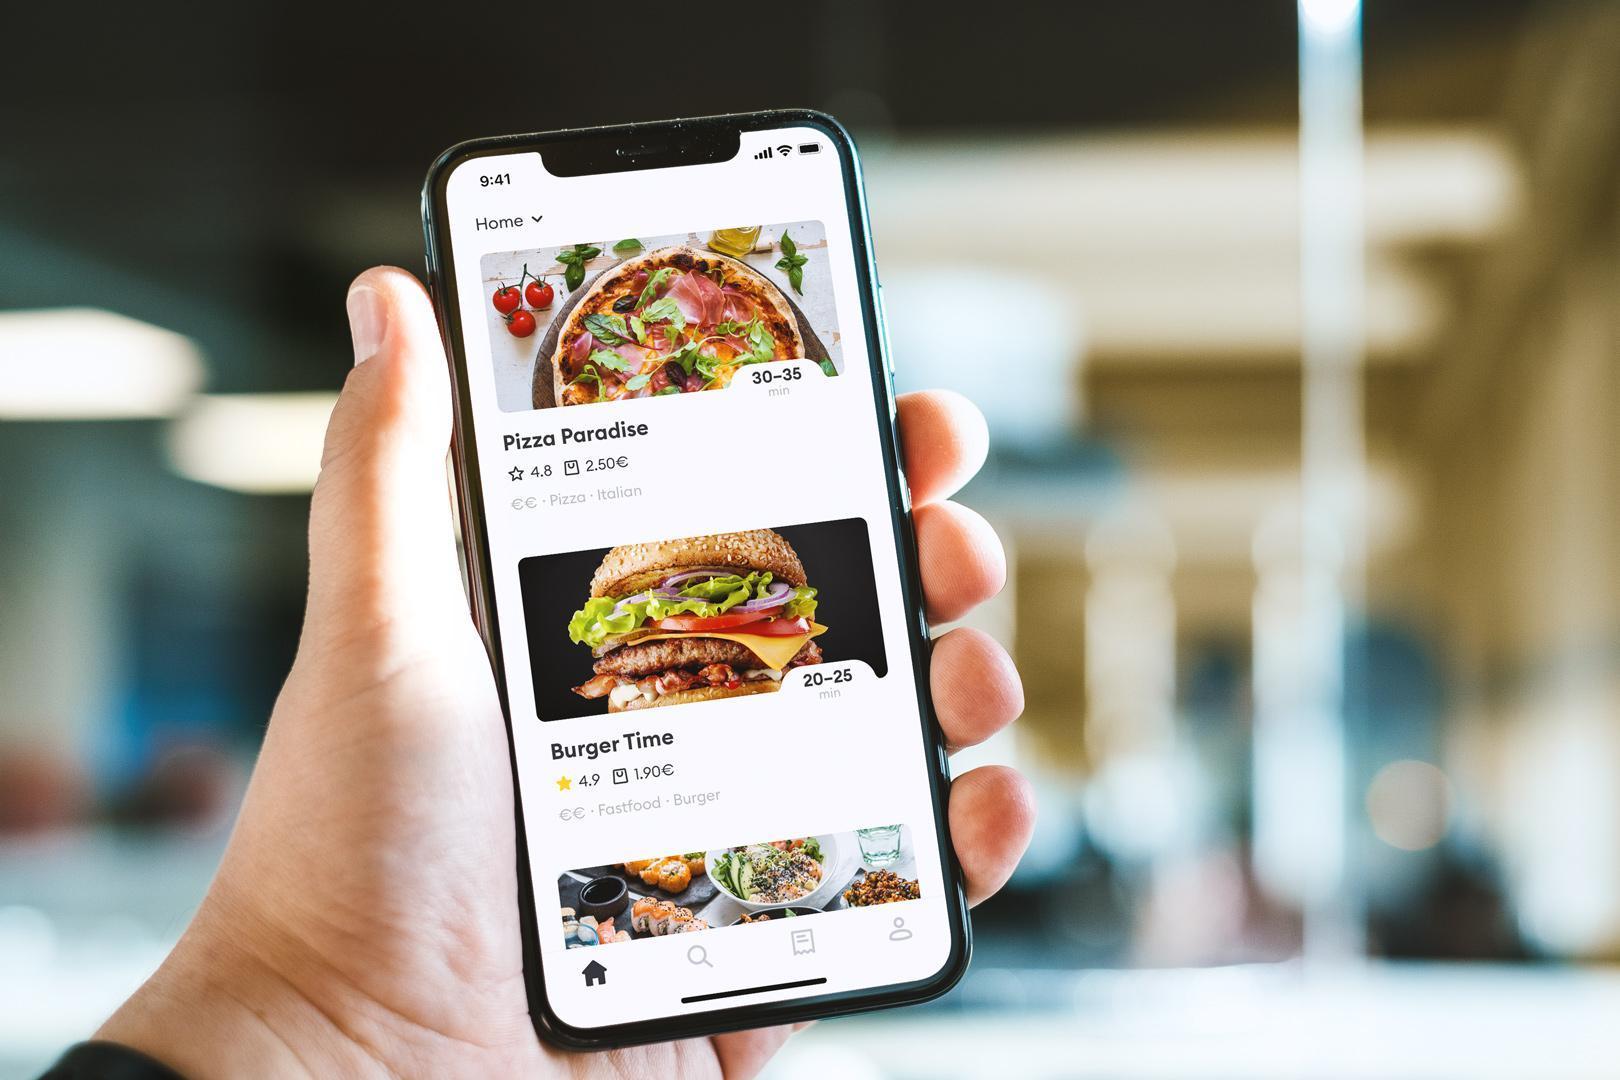 Bolt Food App features 35,000 + restaurants across the globe